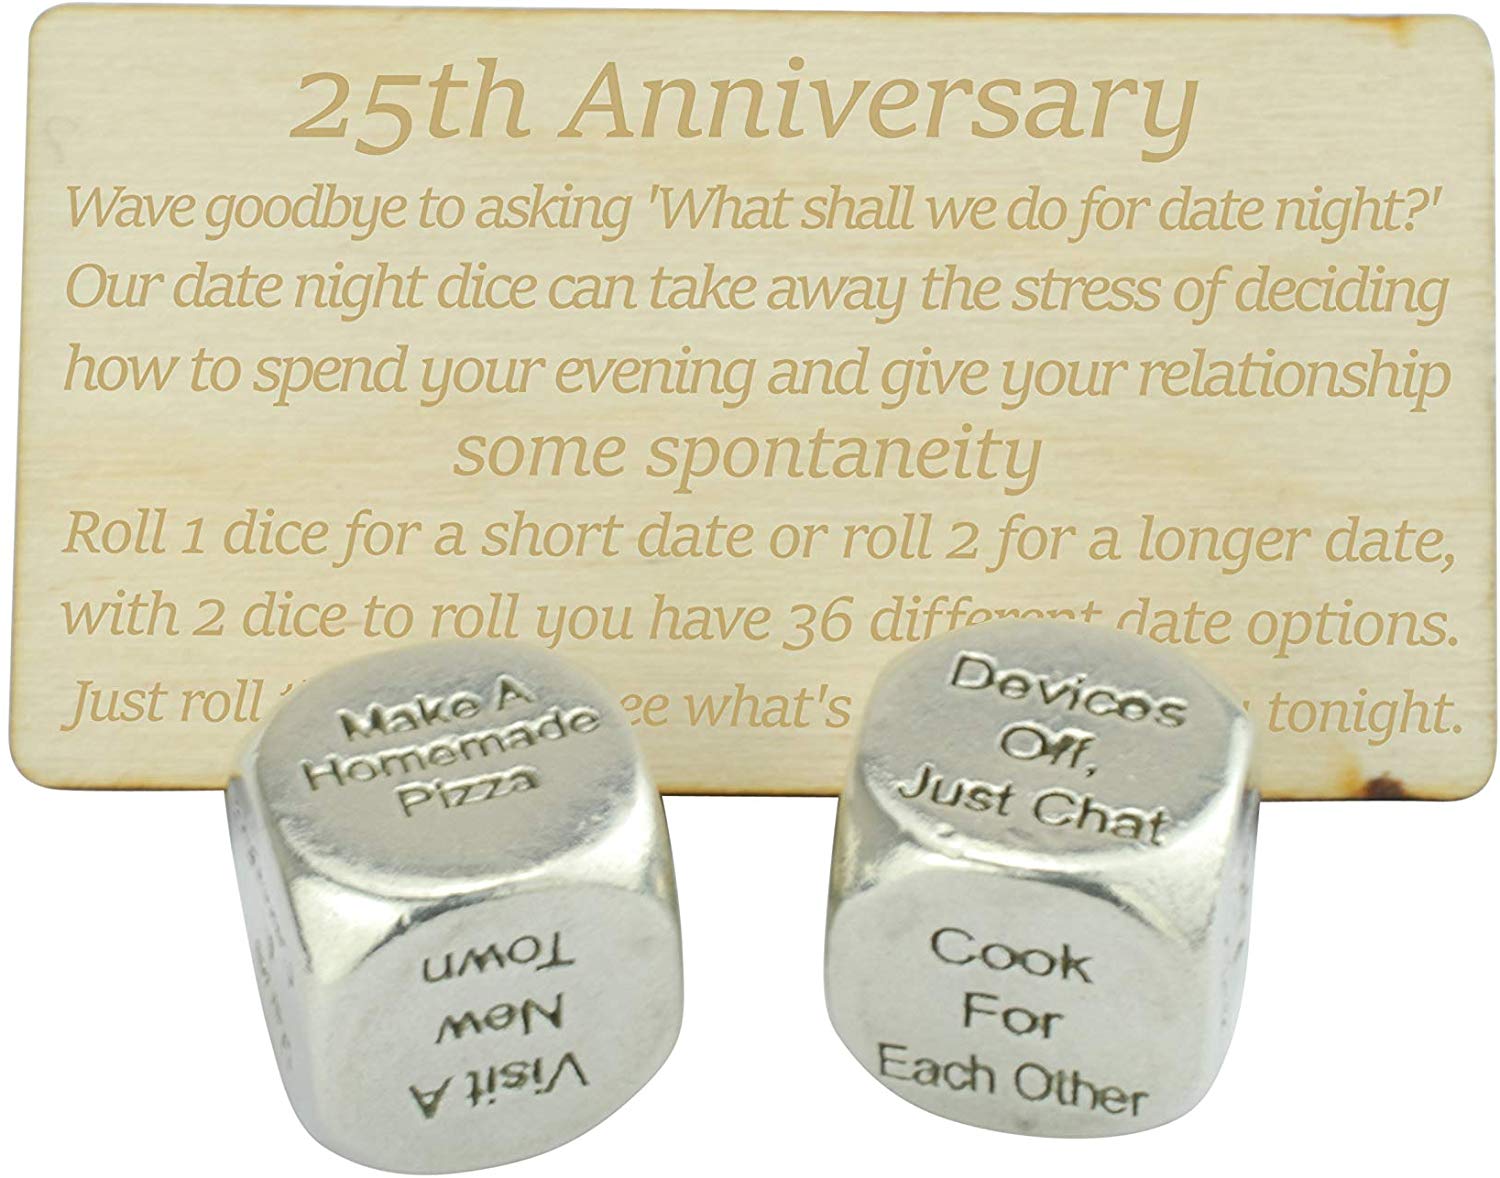 25 Year Anniversary Metal Date Night Dice - Silver Wedding Anniversary Gifts